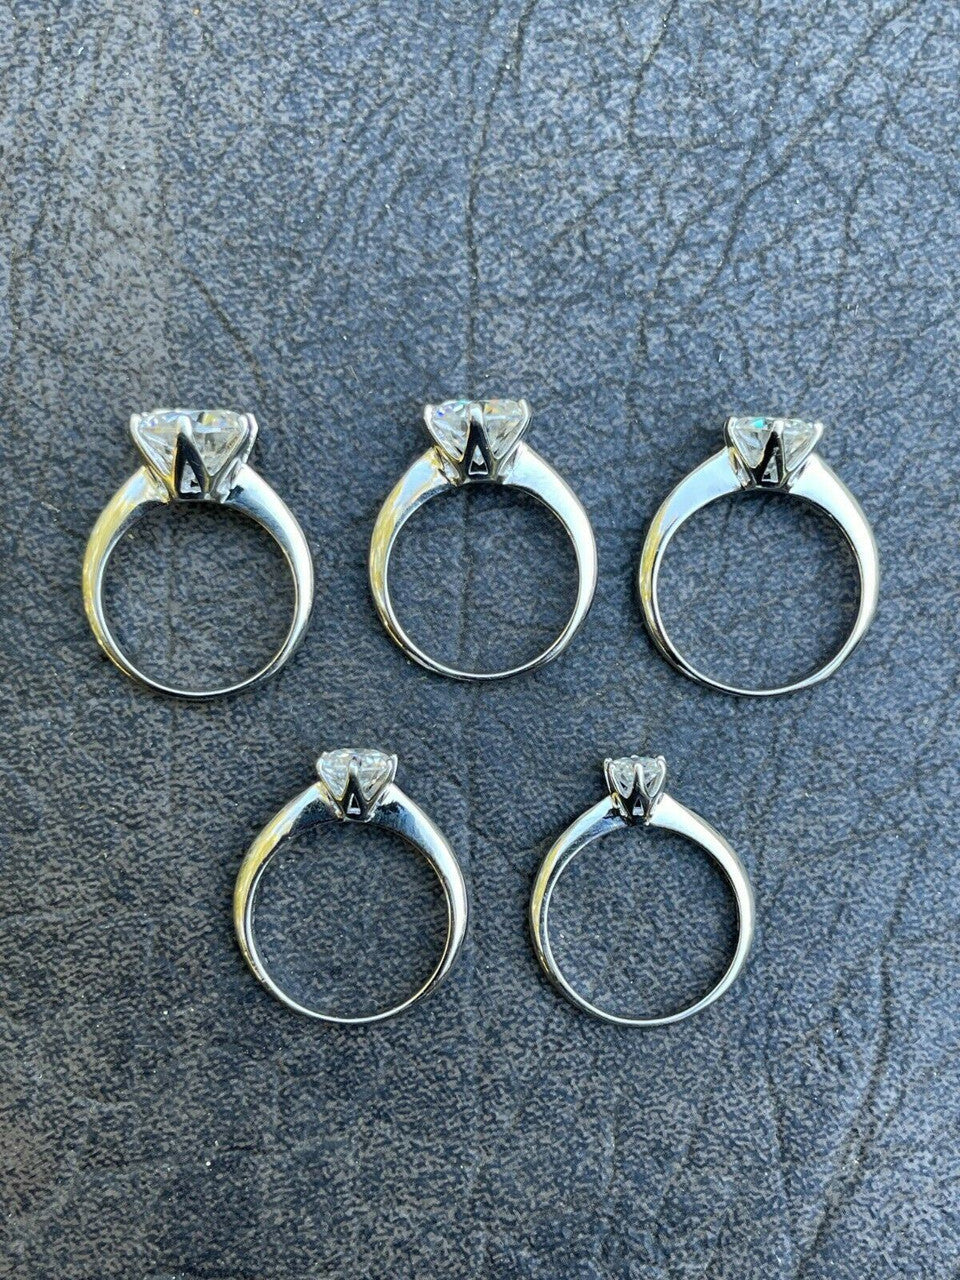 0.5-4ct Genuine Moissanite Engagement Promise Ring Pass Diamond Tester 925 Sterling Silver